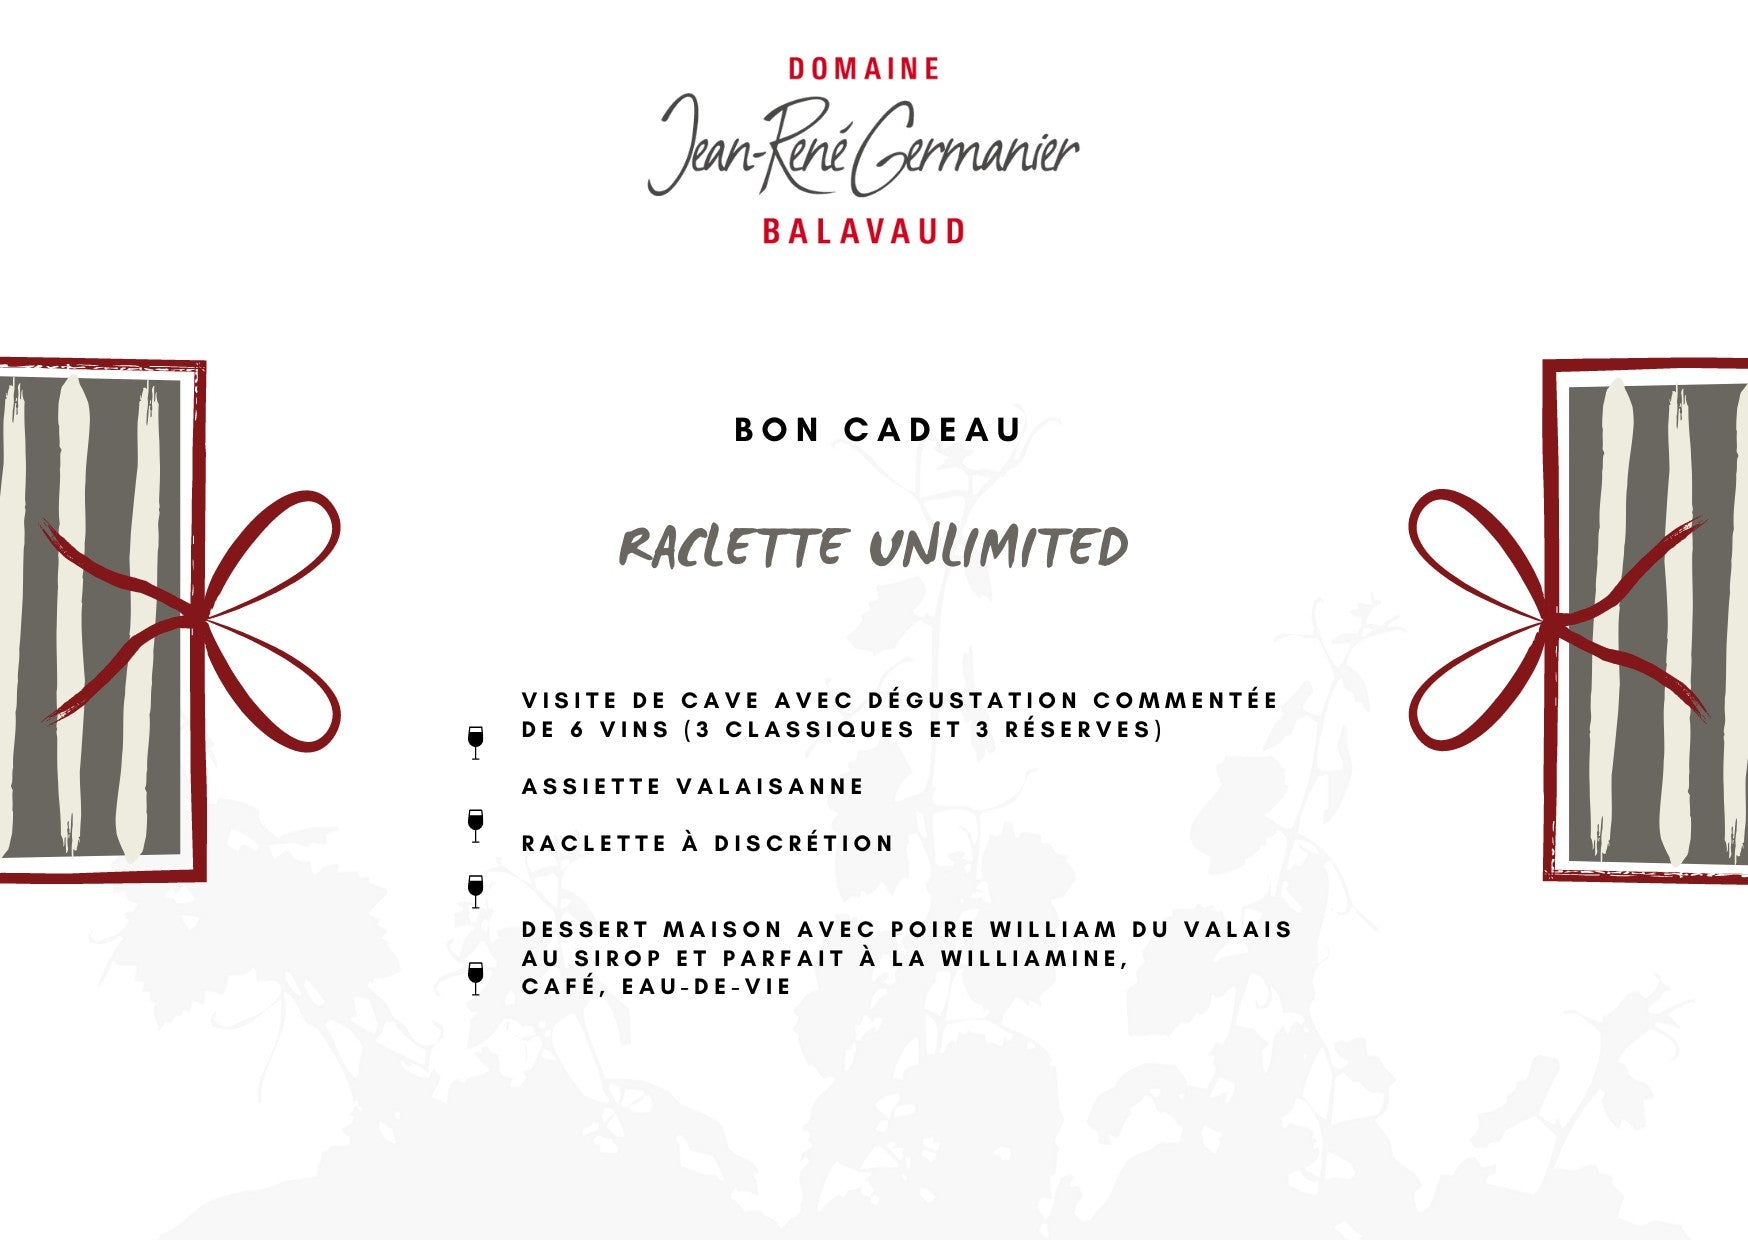 Raclette unlimited